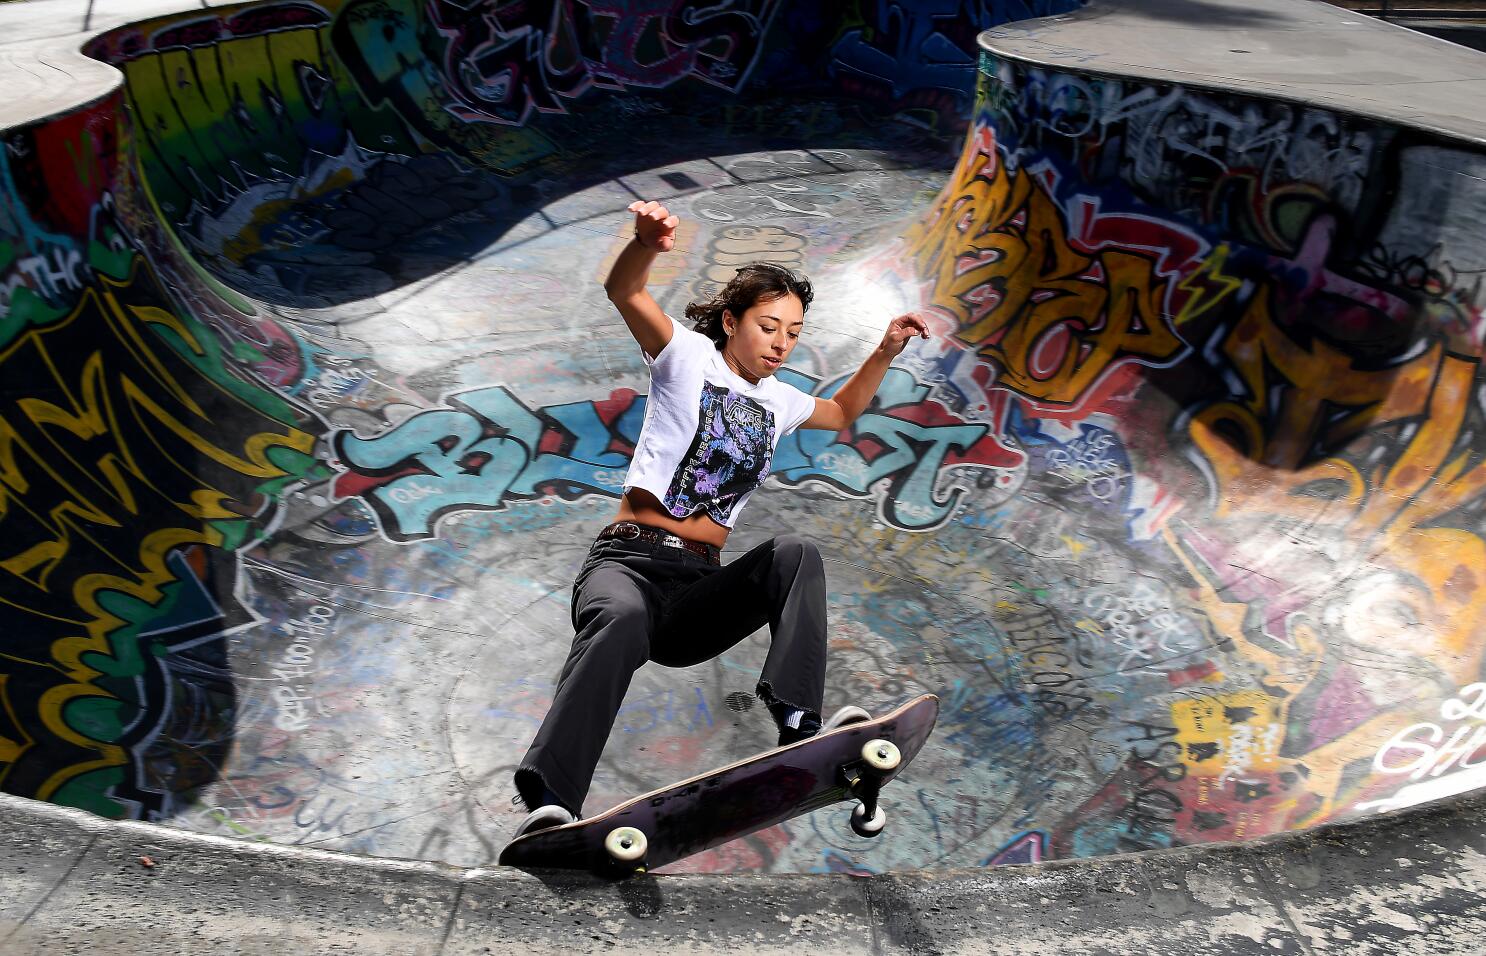 Skateboard Graffiti - Art of Living - Sports and Lifestyle